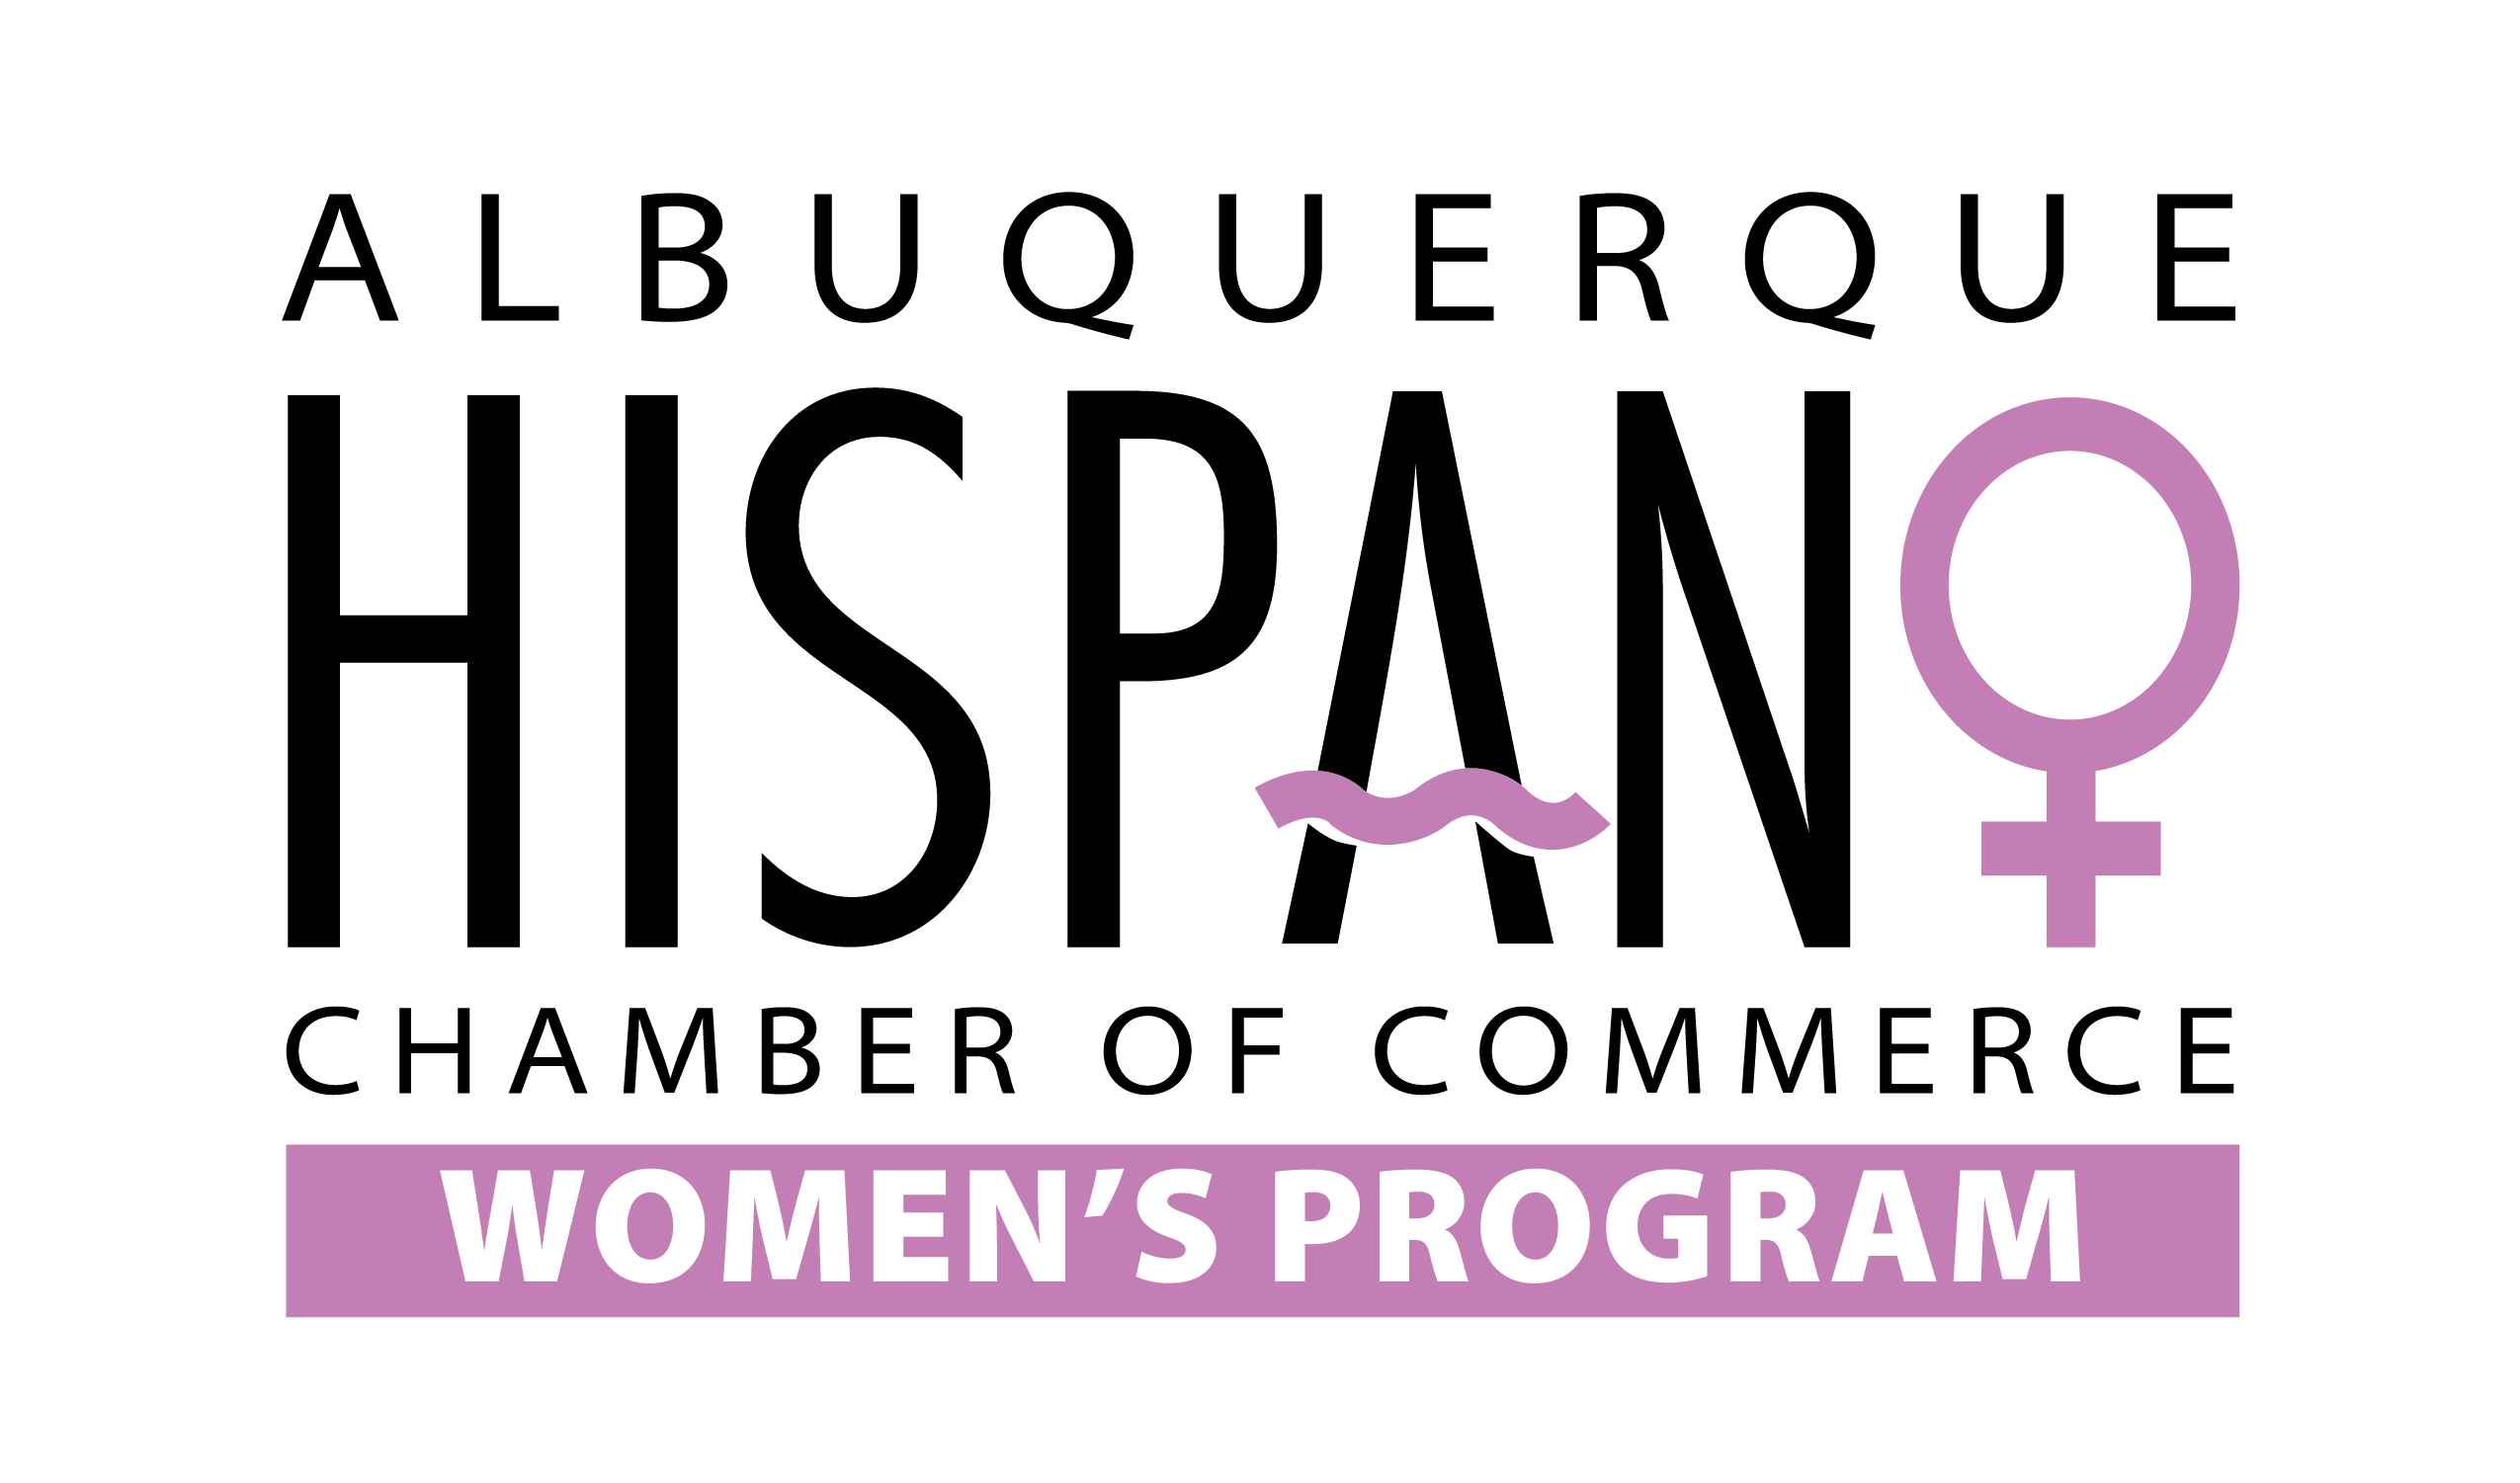 ABQ Hispano Chamber of Commerce - Women's Program